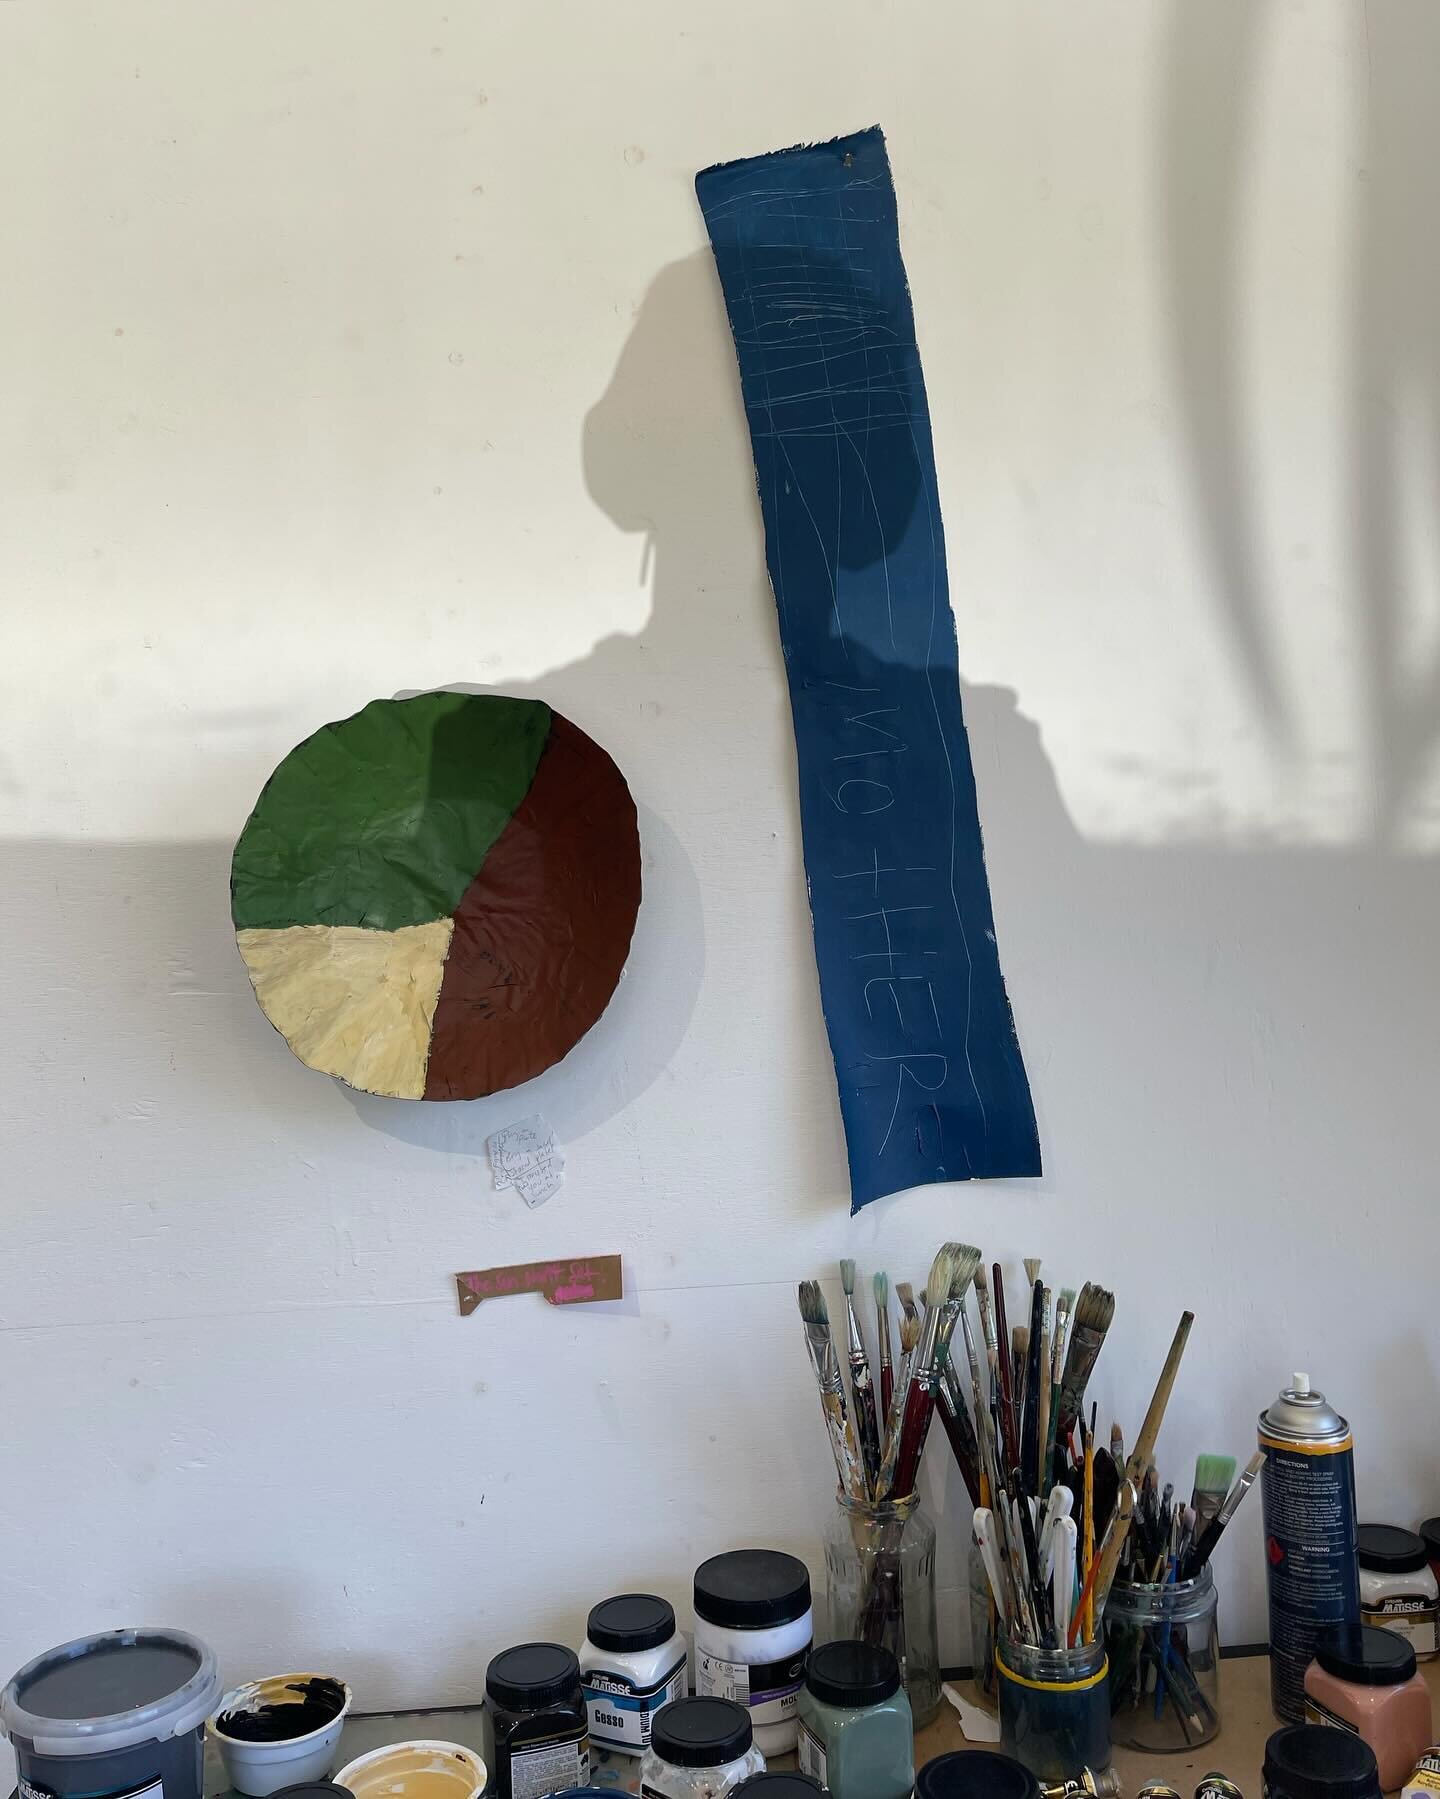 Afternoon shadows in the studio. 

Busily working away on some &lsquo;big feelings&rsquo; pieces&hellip;more to come.

#eleesahowardart #papermache #painting #multidisciplinaryartistartist #australianemergingartist #artiststudio